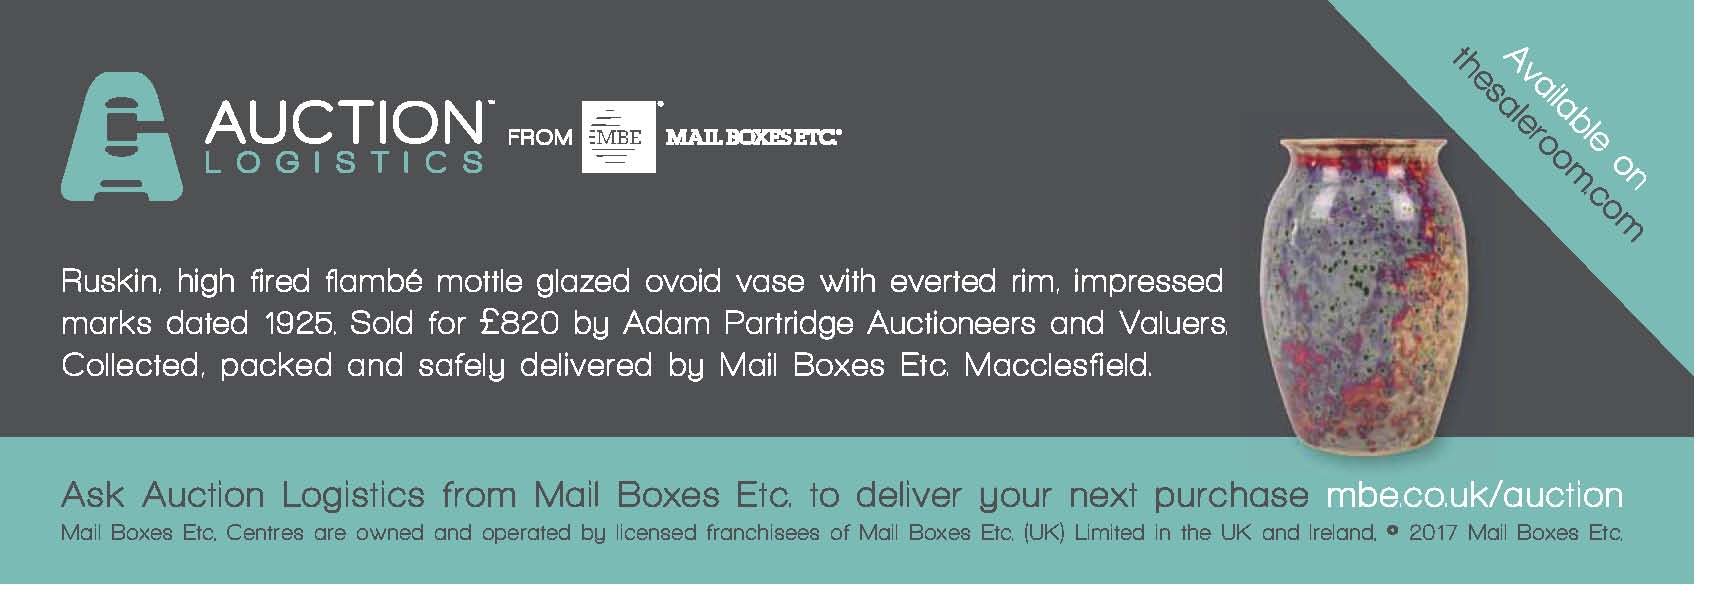 Mailboxes 1-6.jpg